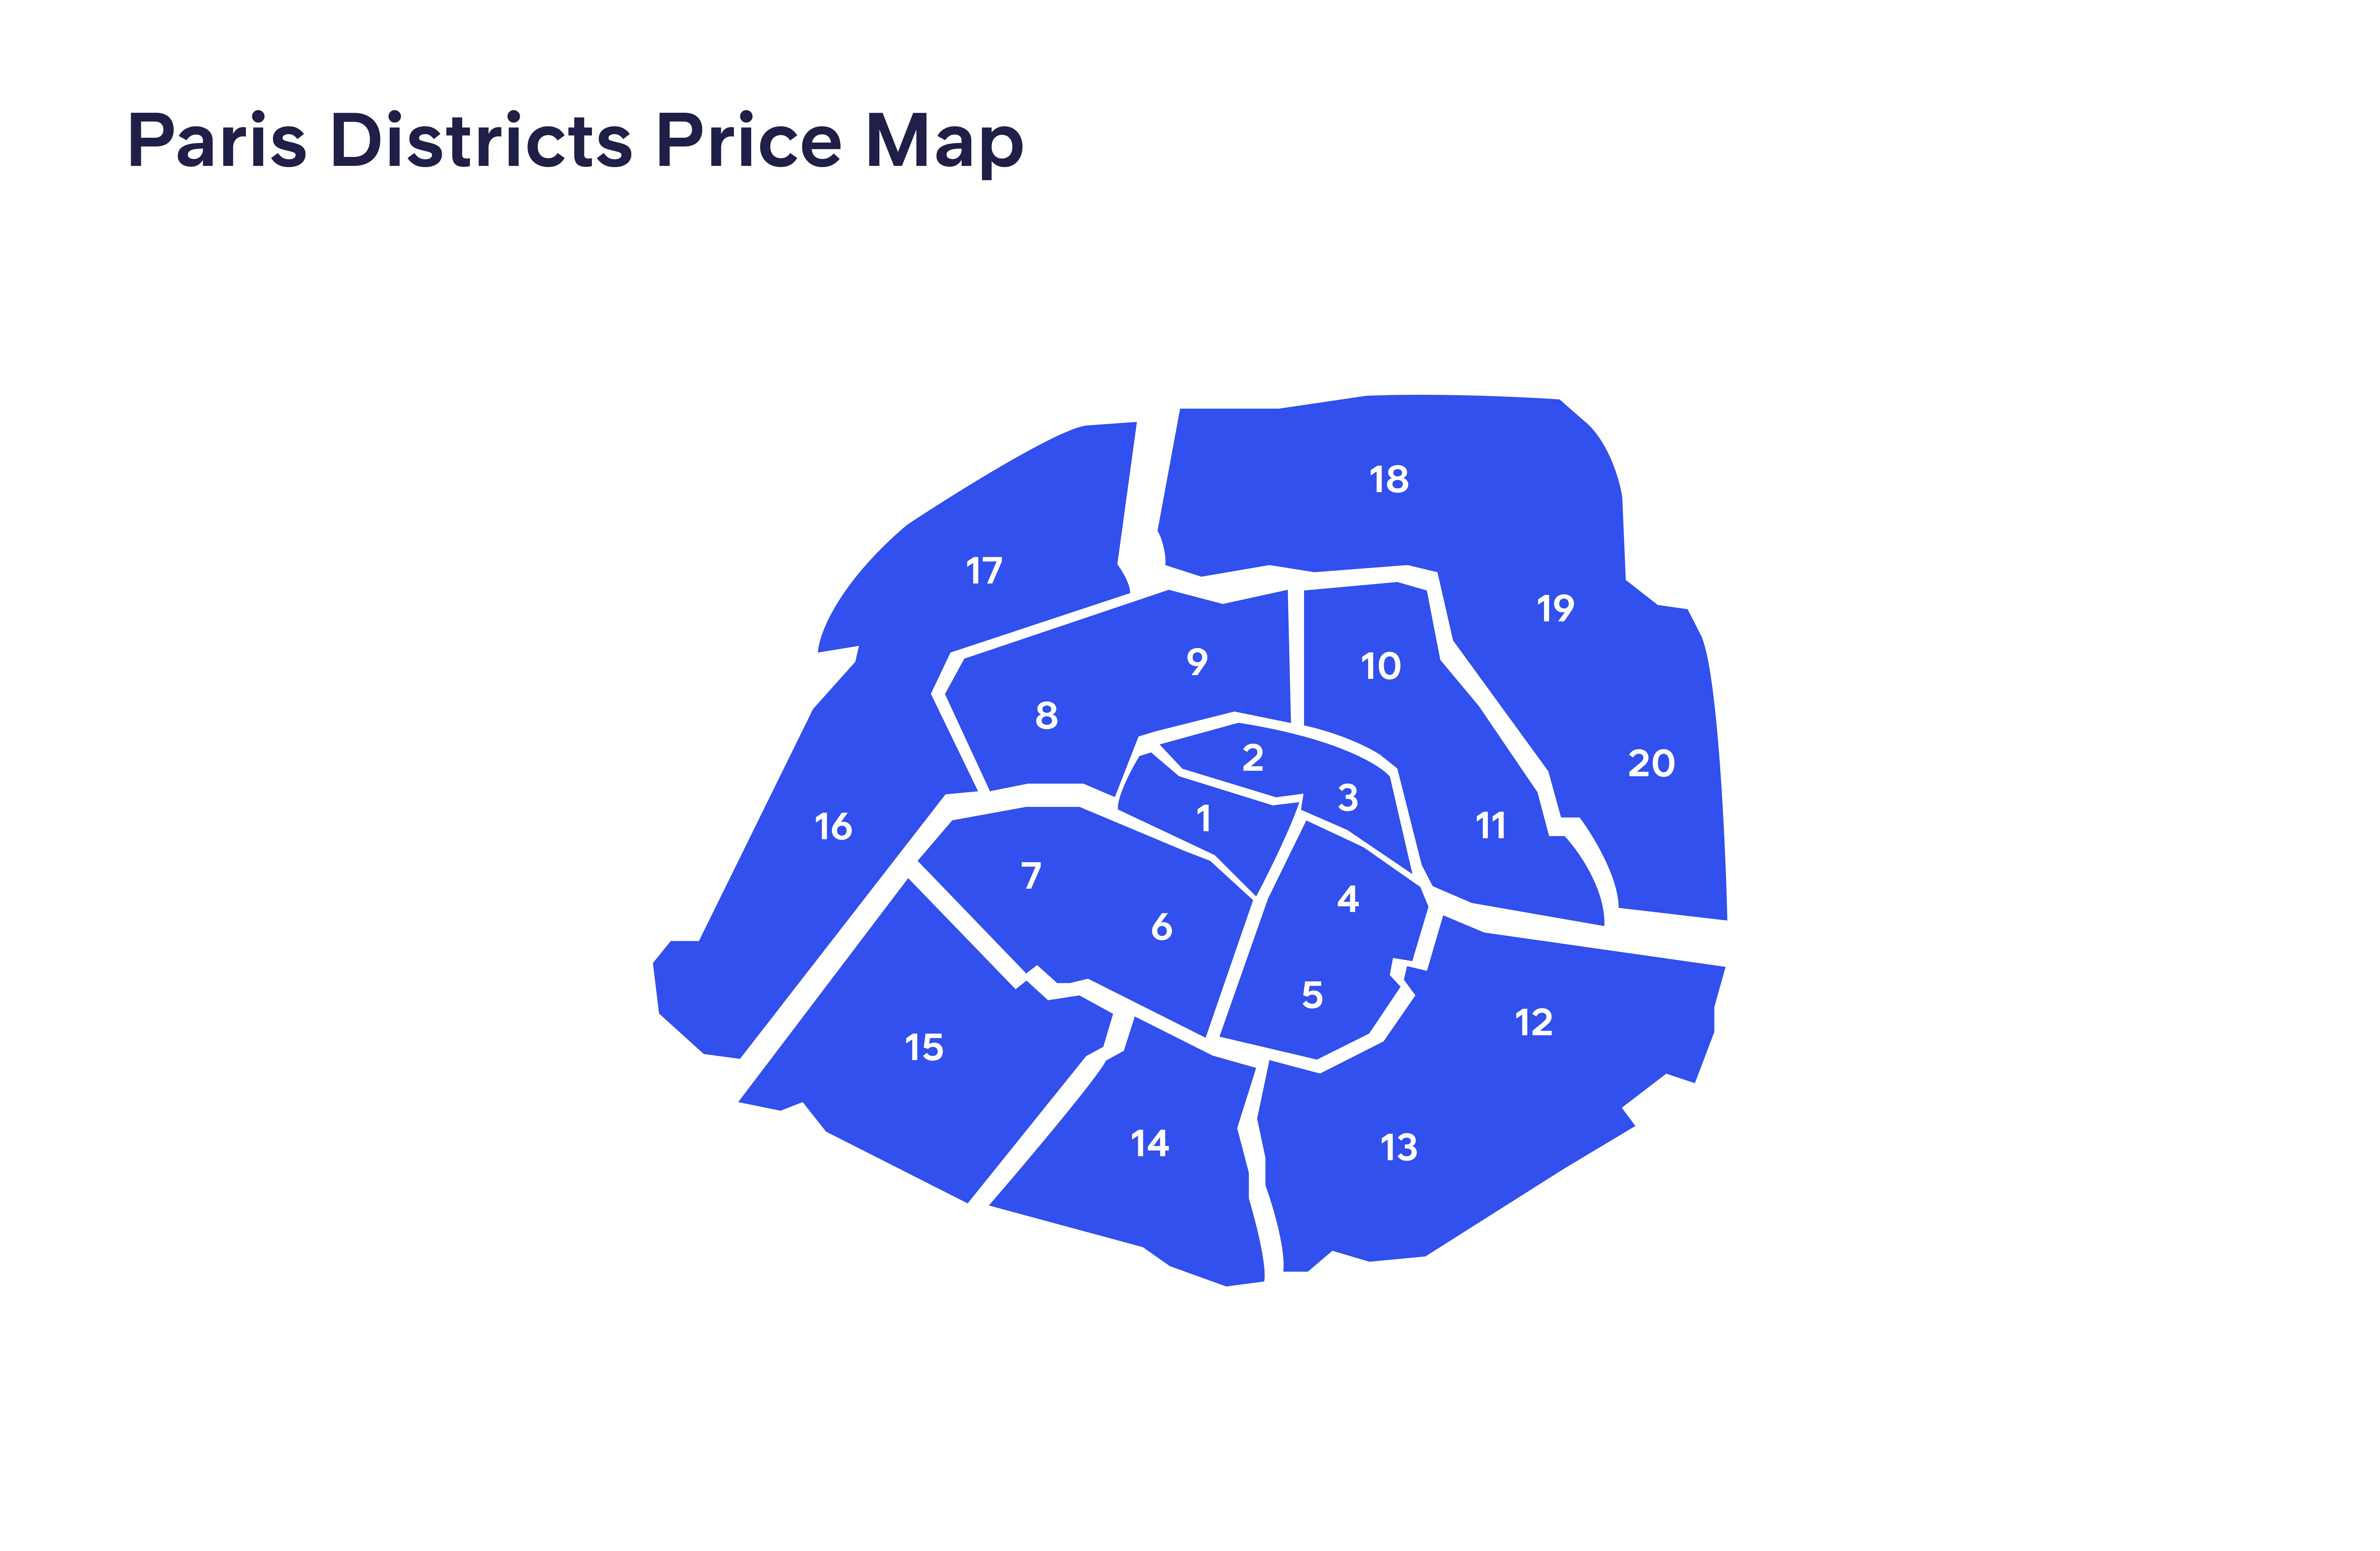 Paris office spaces prices per district